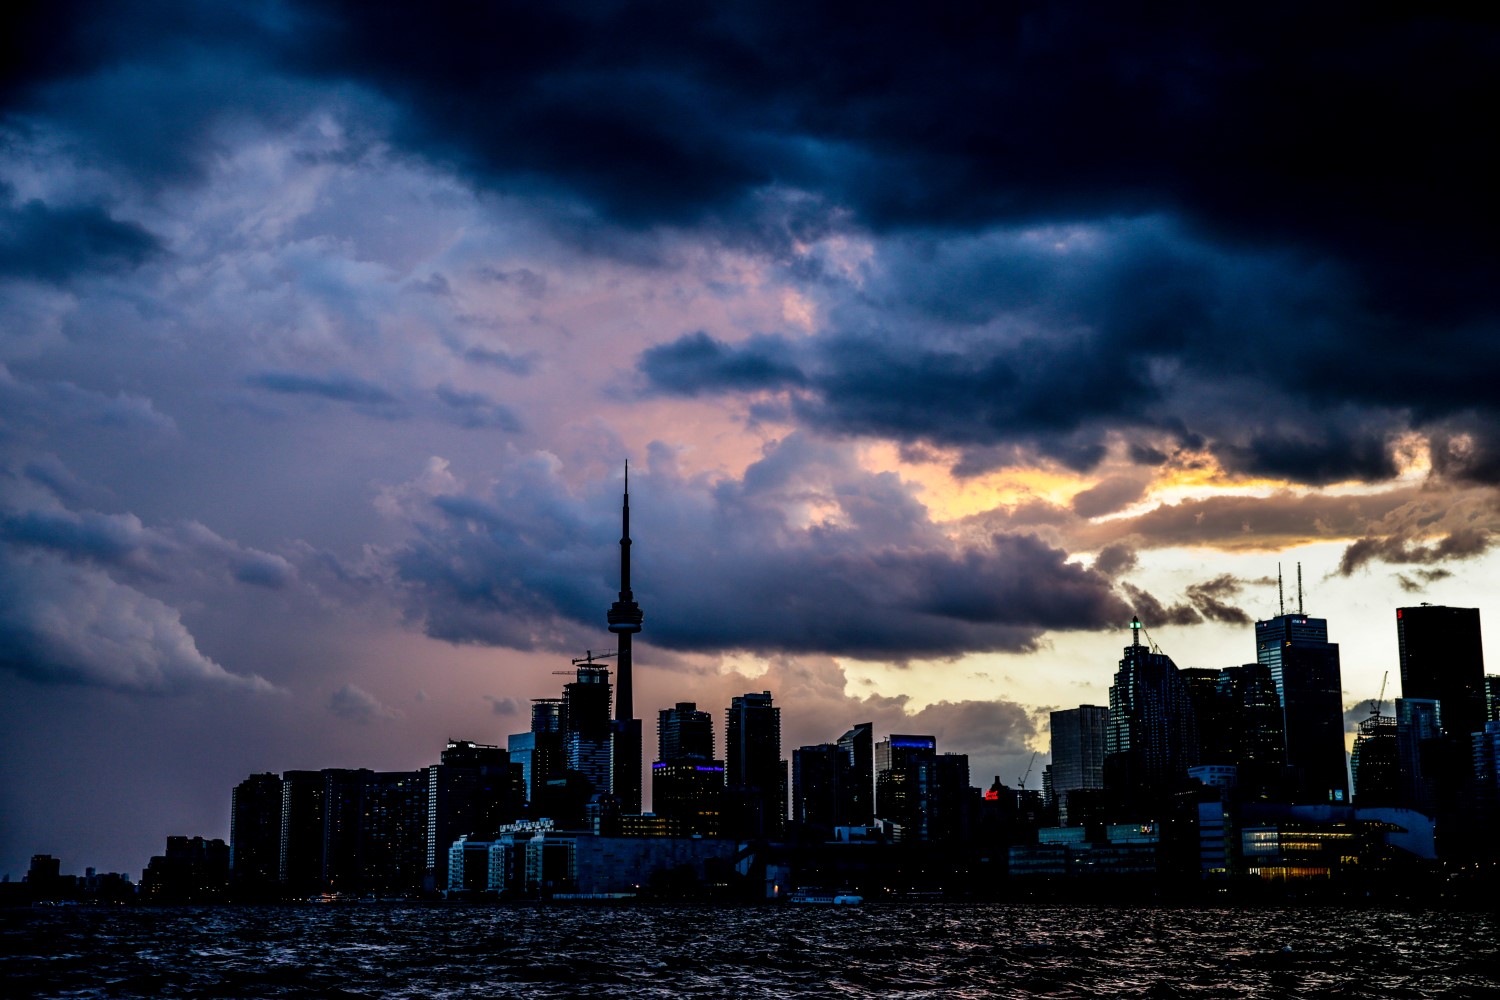 Sunrise behind the Toronto skyline